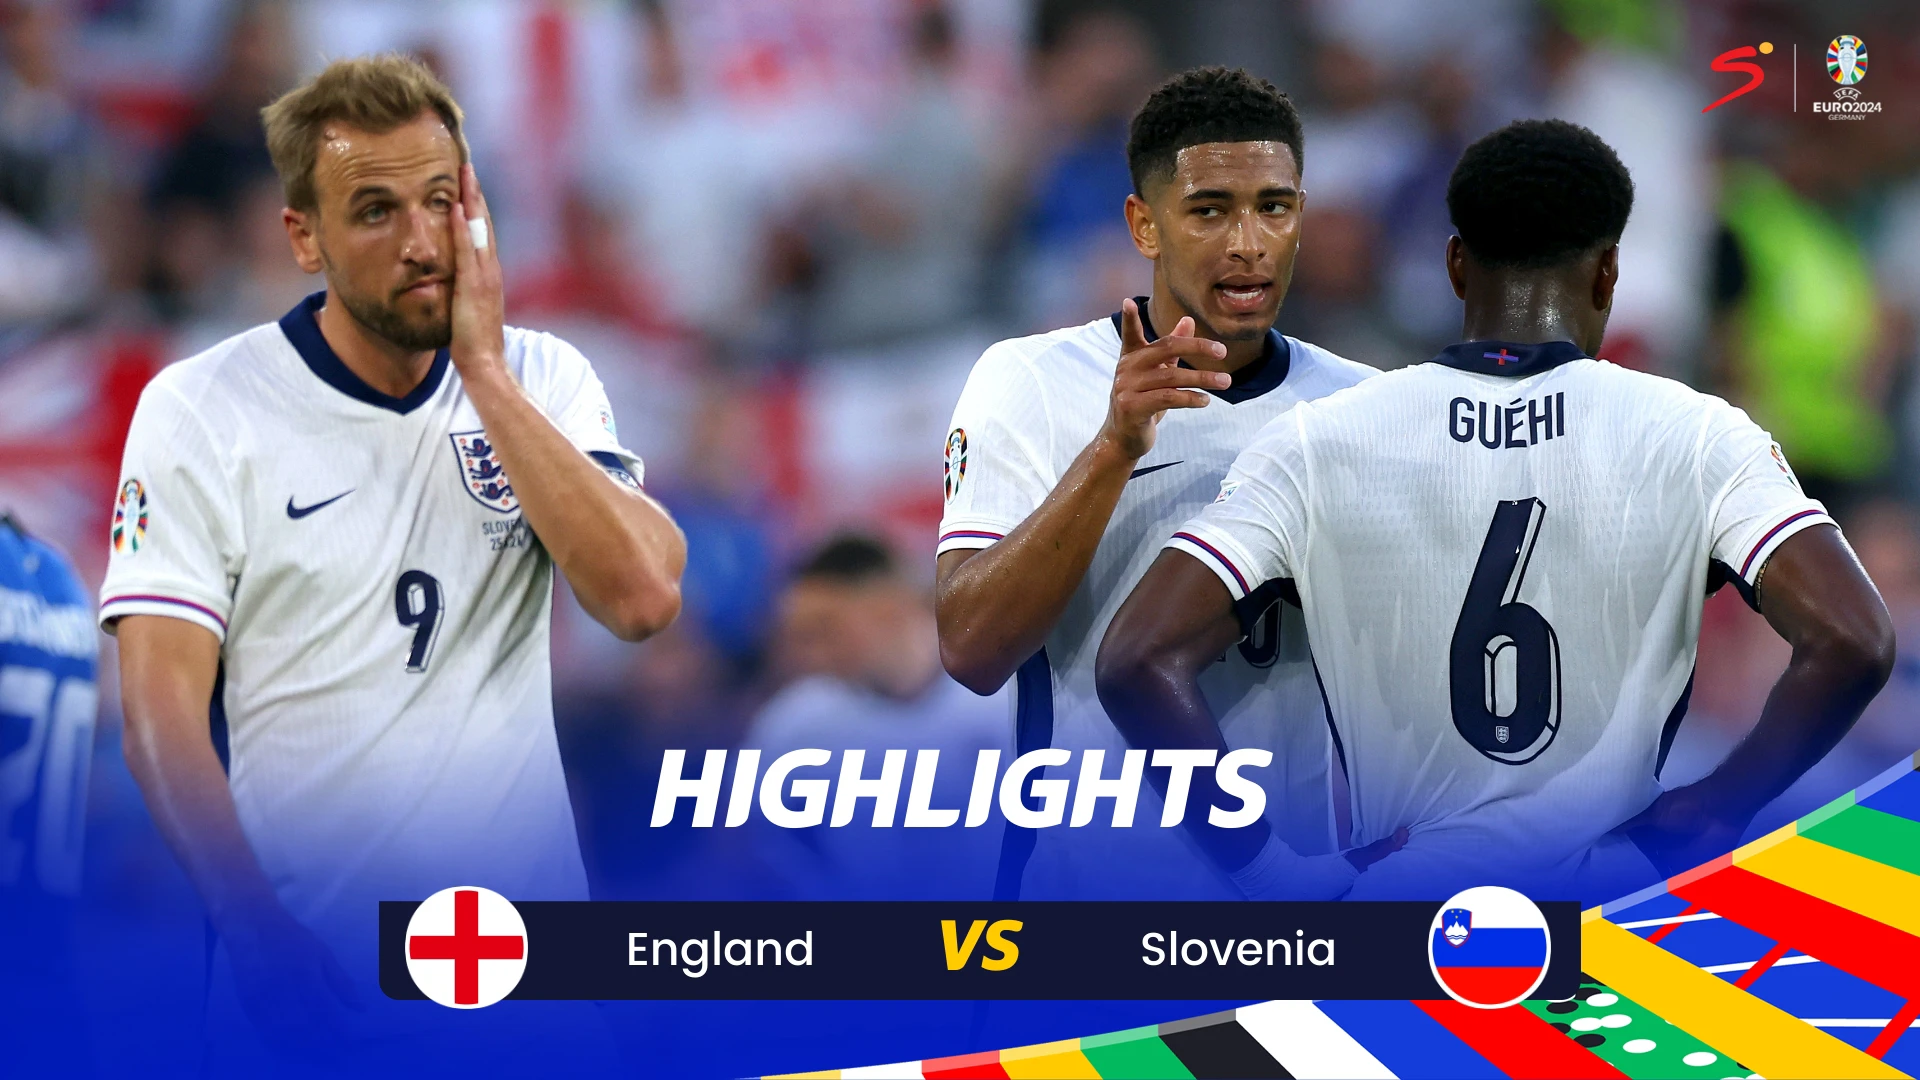 England vs Slovenia - Figure 1